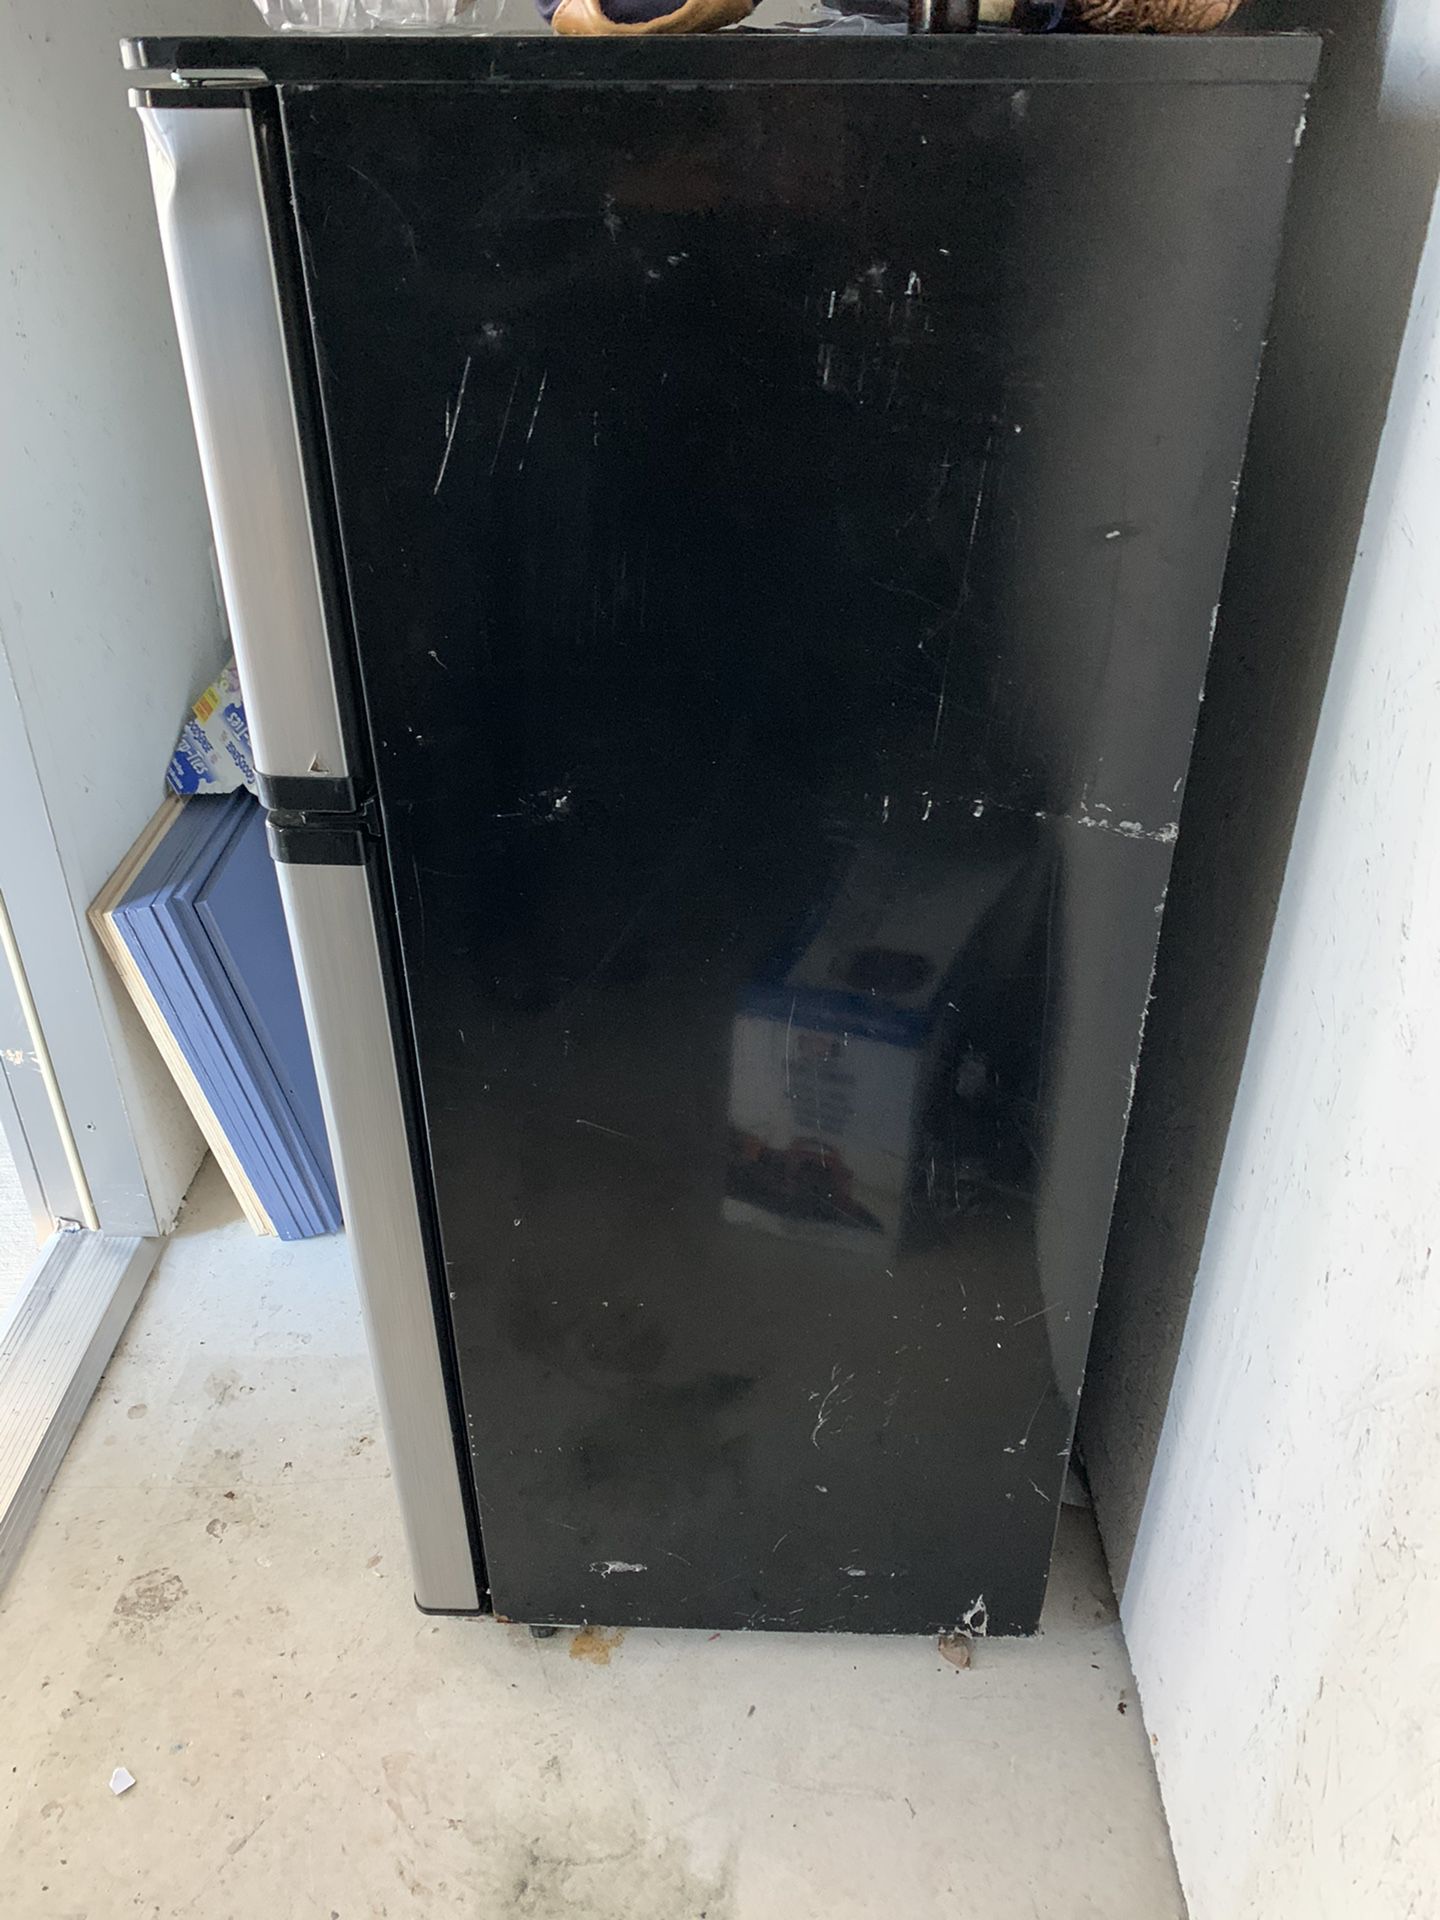 College refrigerator